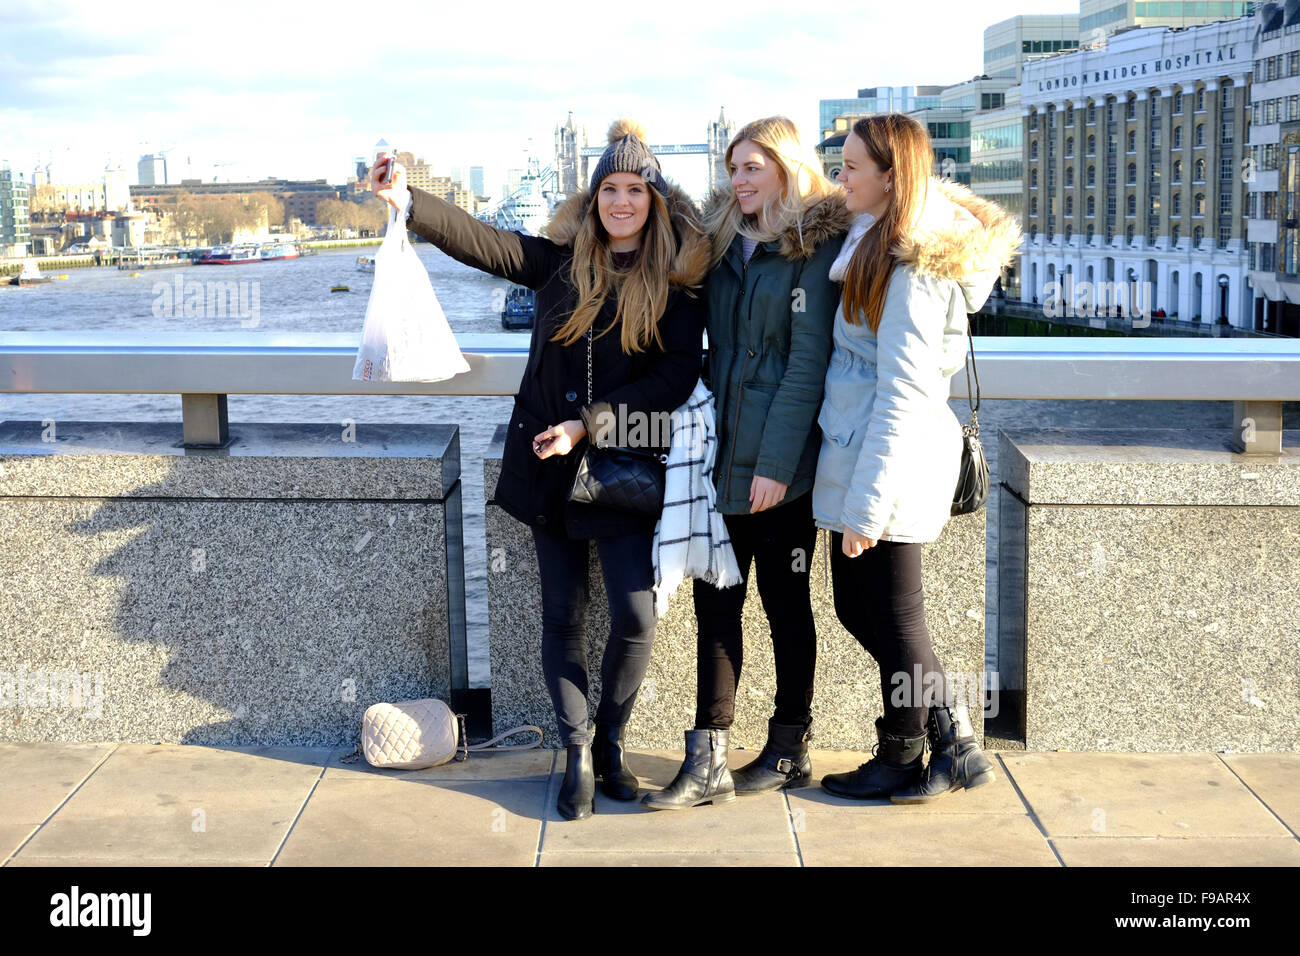 Street photography in London - friends taking a group selfie on London Bridge spot the photographer Stock Photo